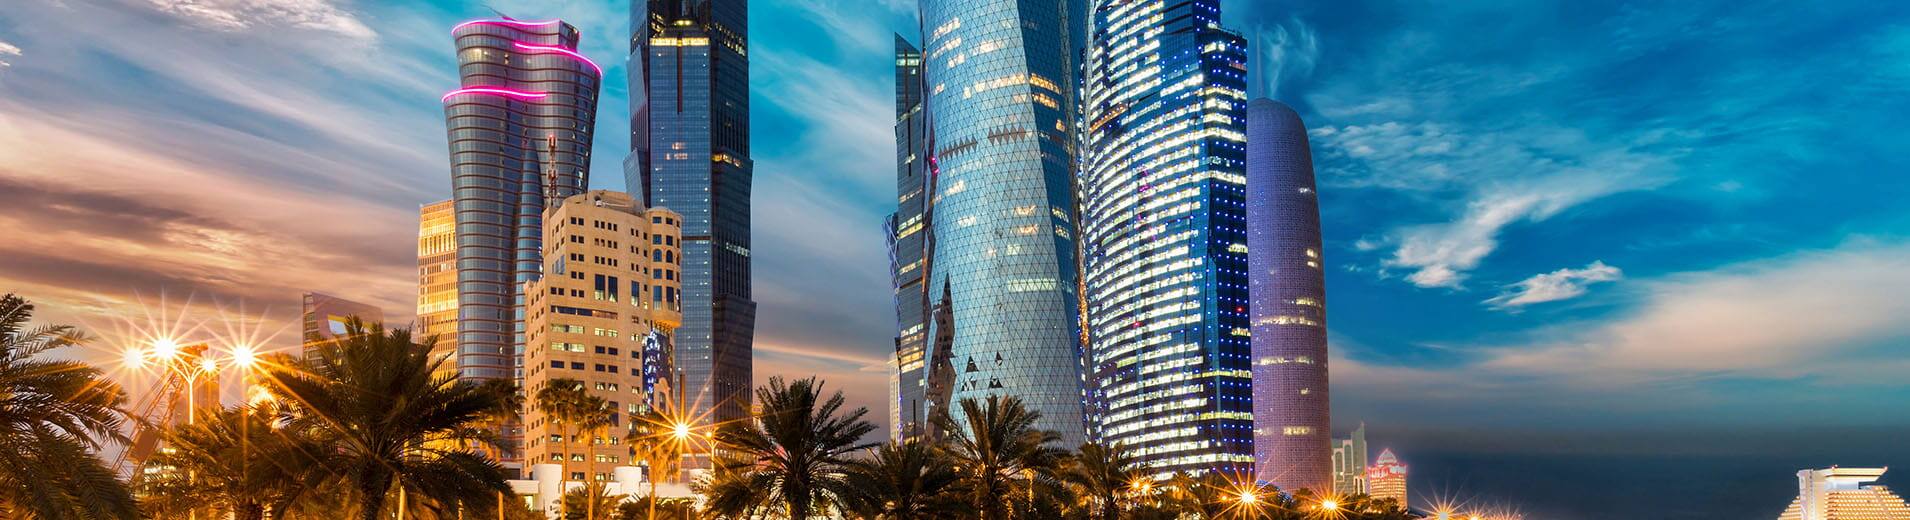 Doha_Qatar_City_L_0297_1910x520